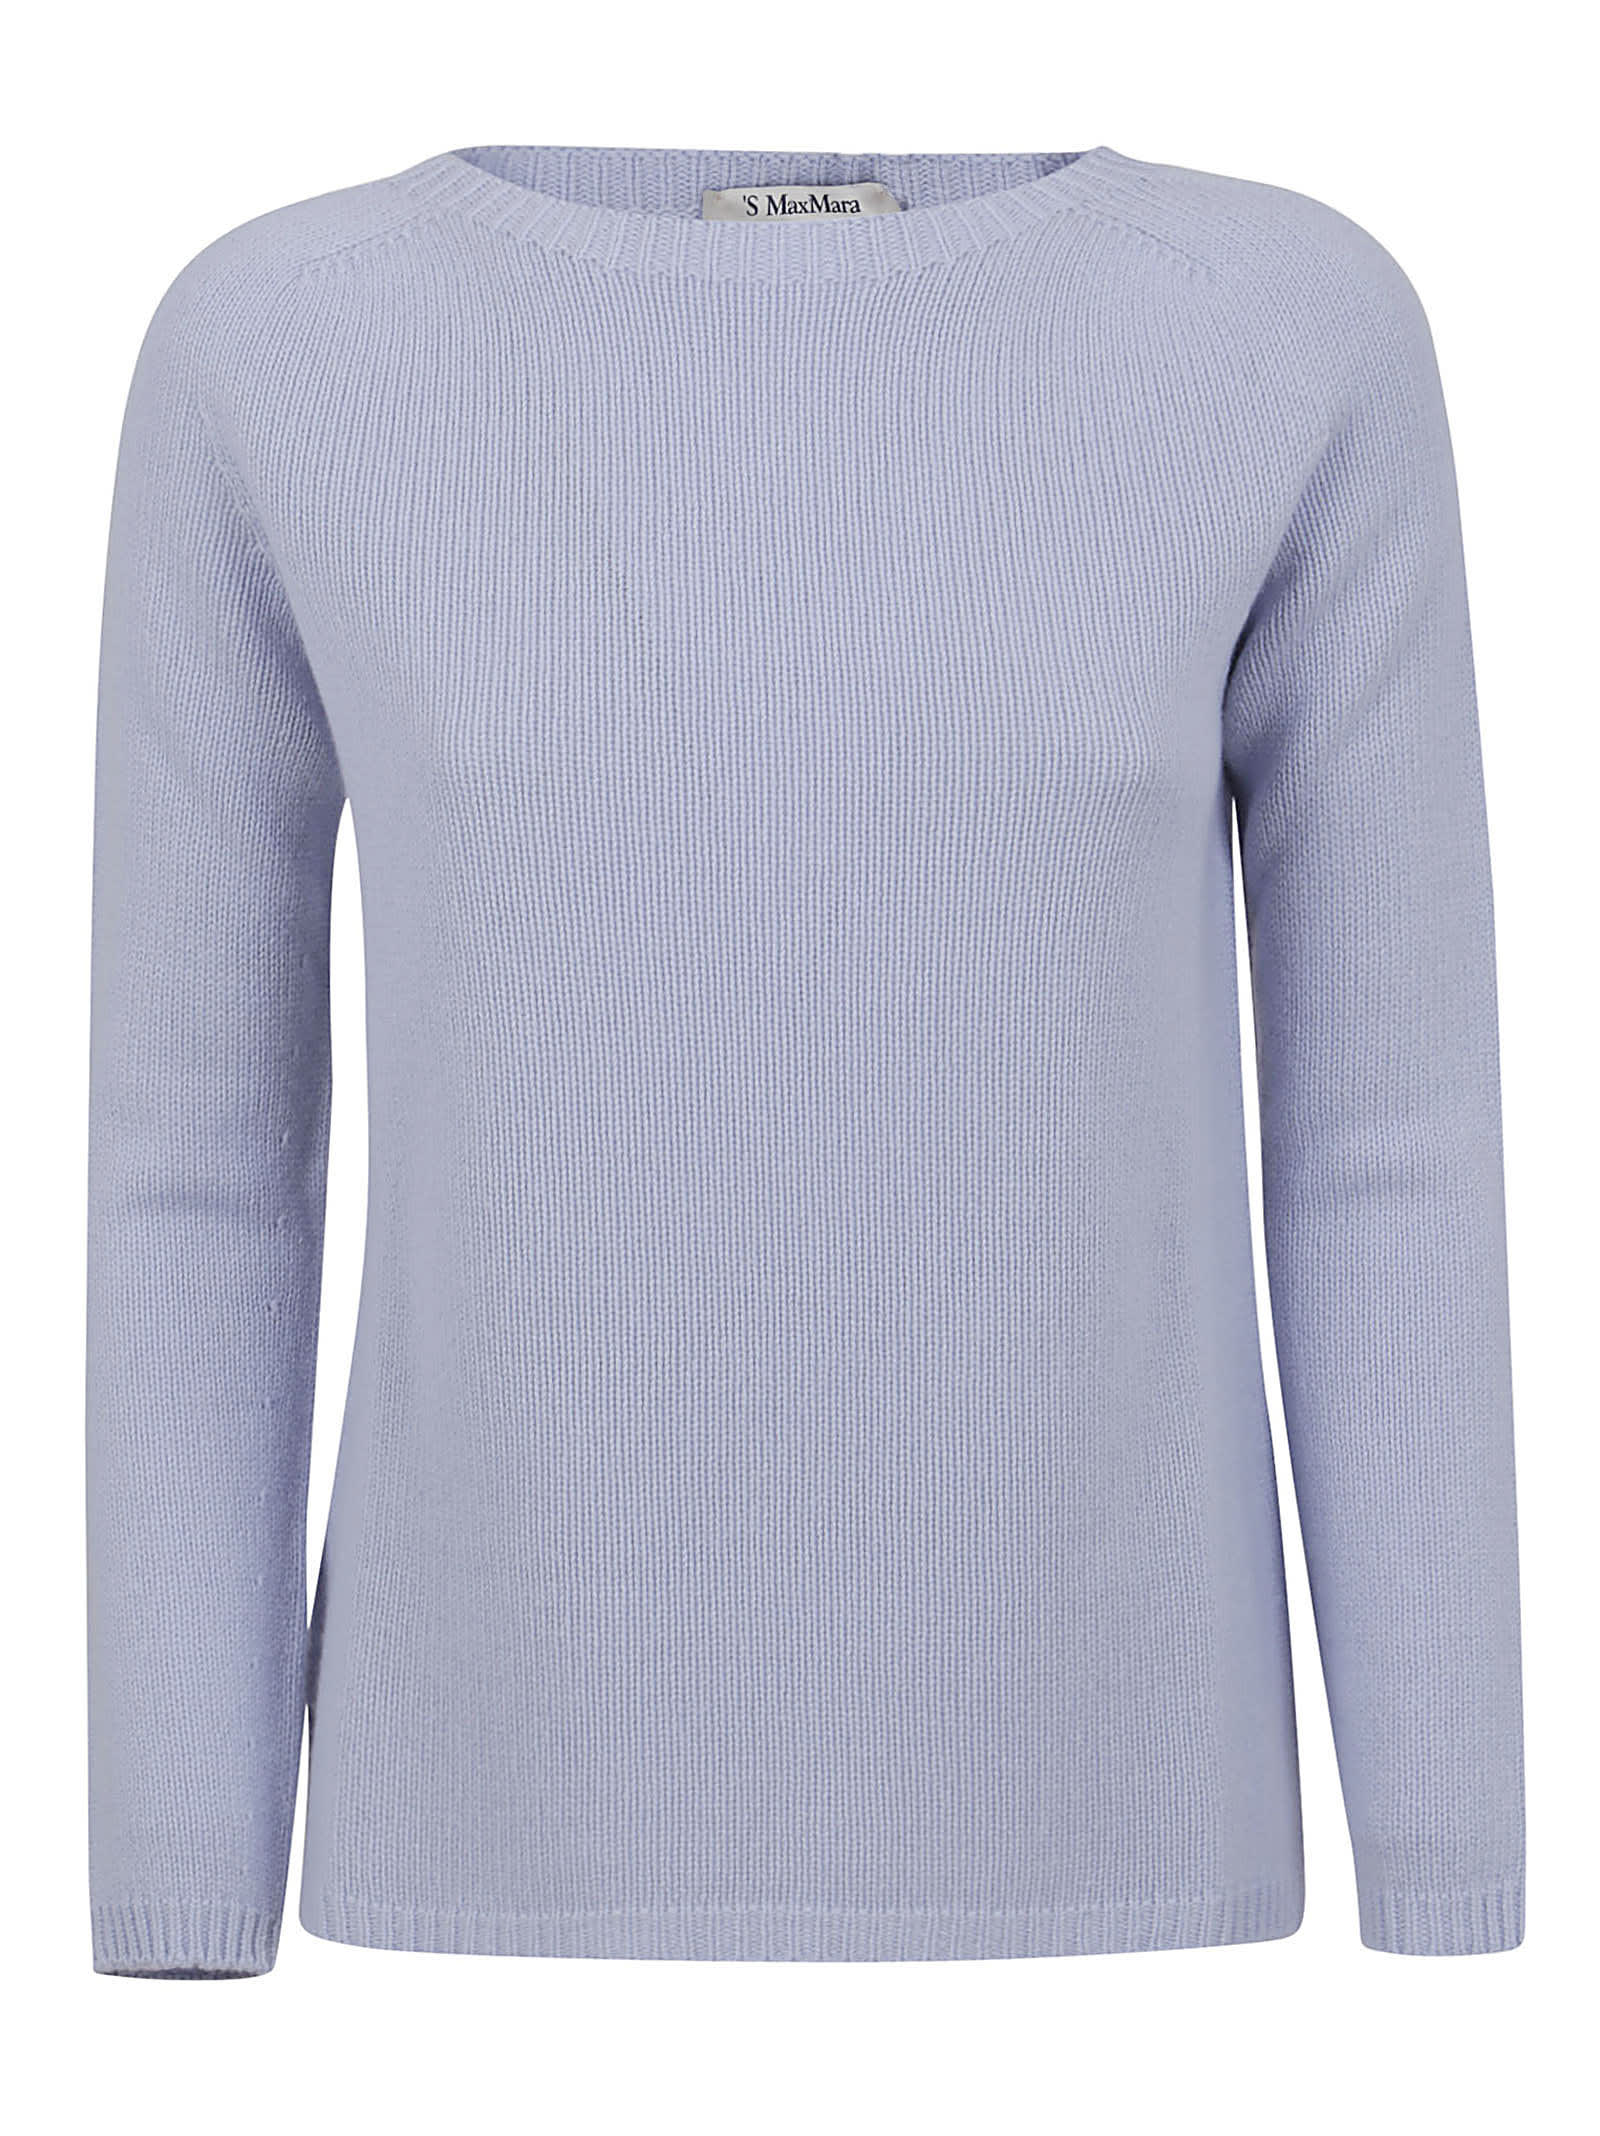 S Max Mara Light Blue Cashmere Sweater